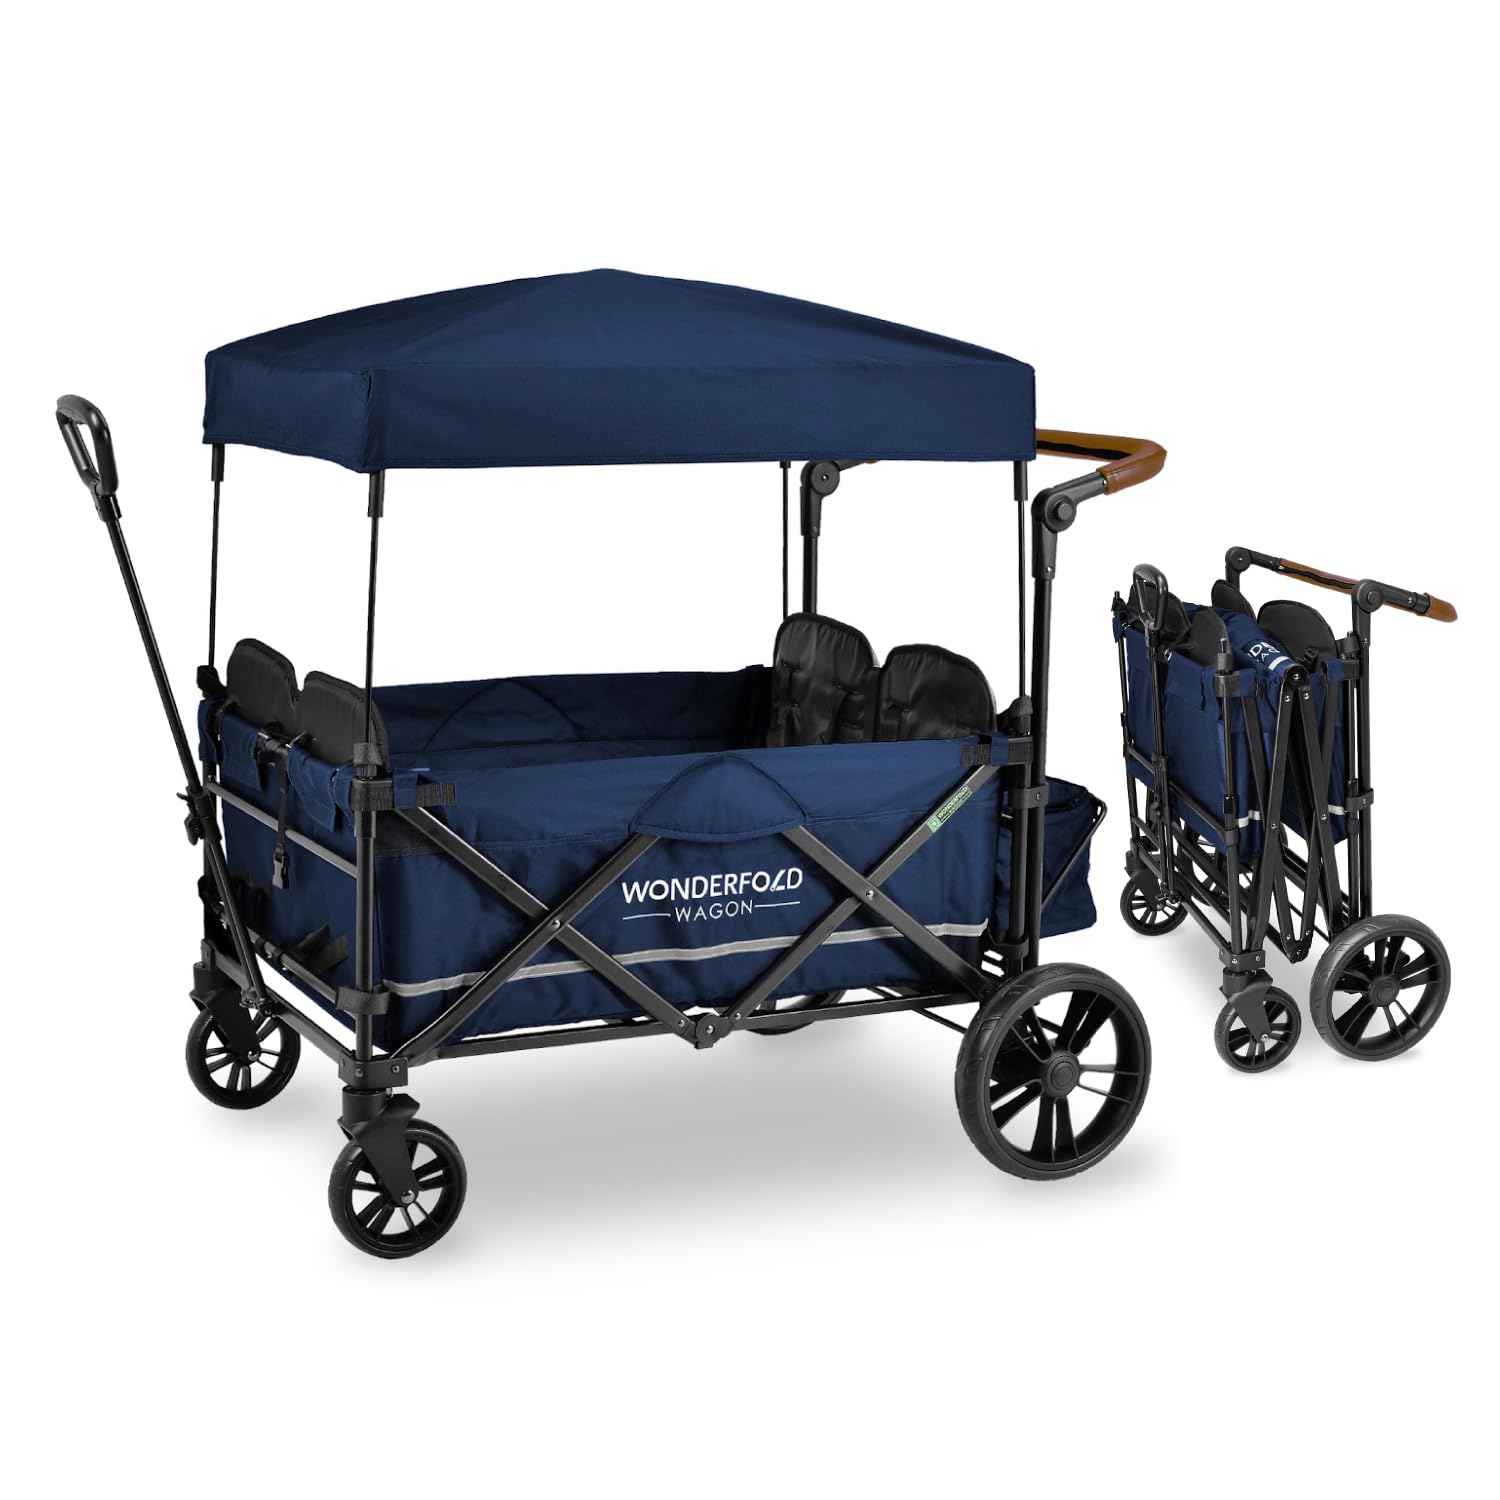 WONDERFOLD X4 Stroller Wagon Review